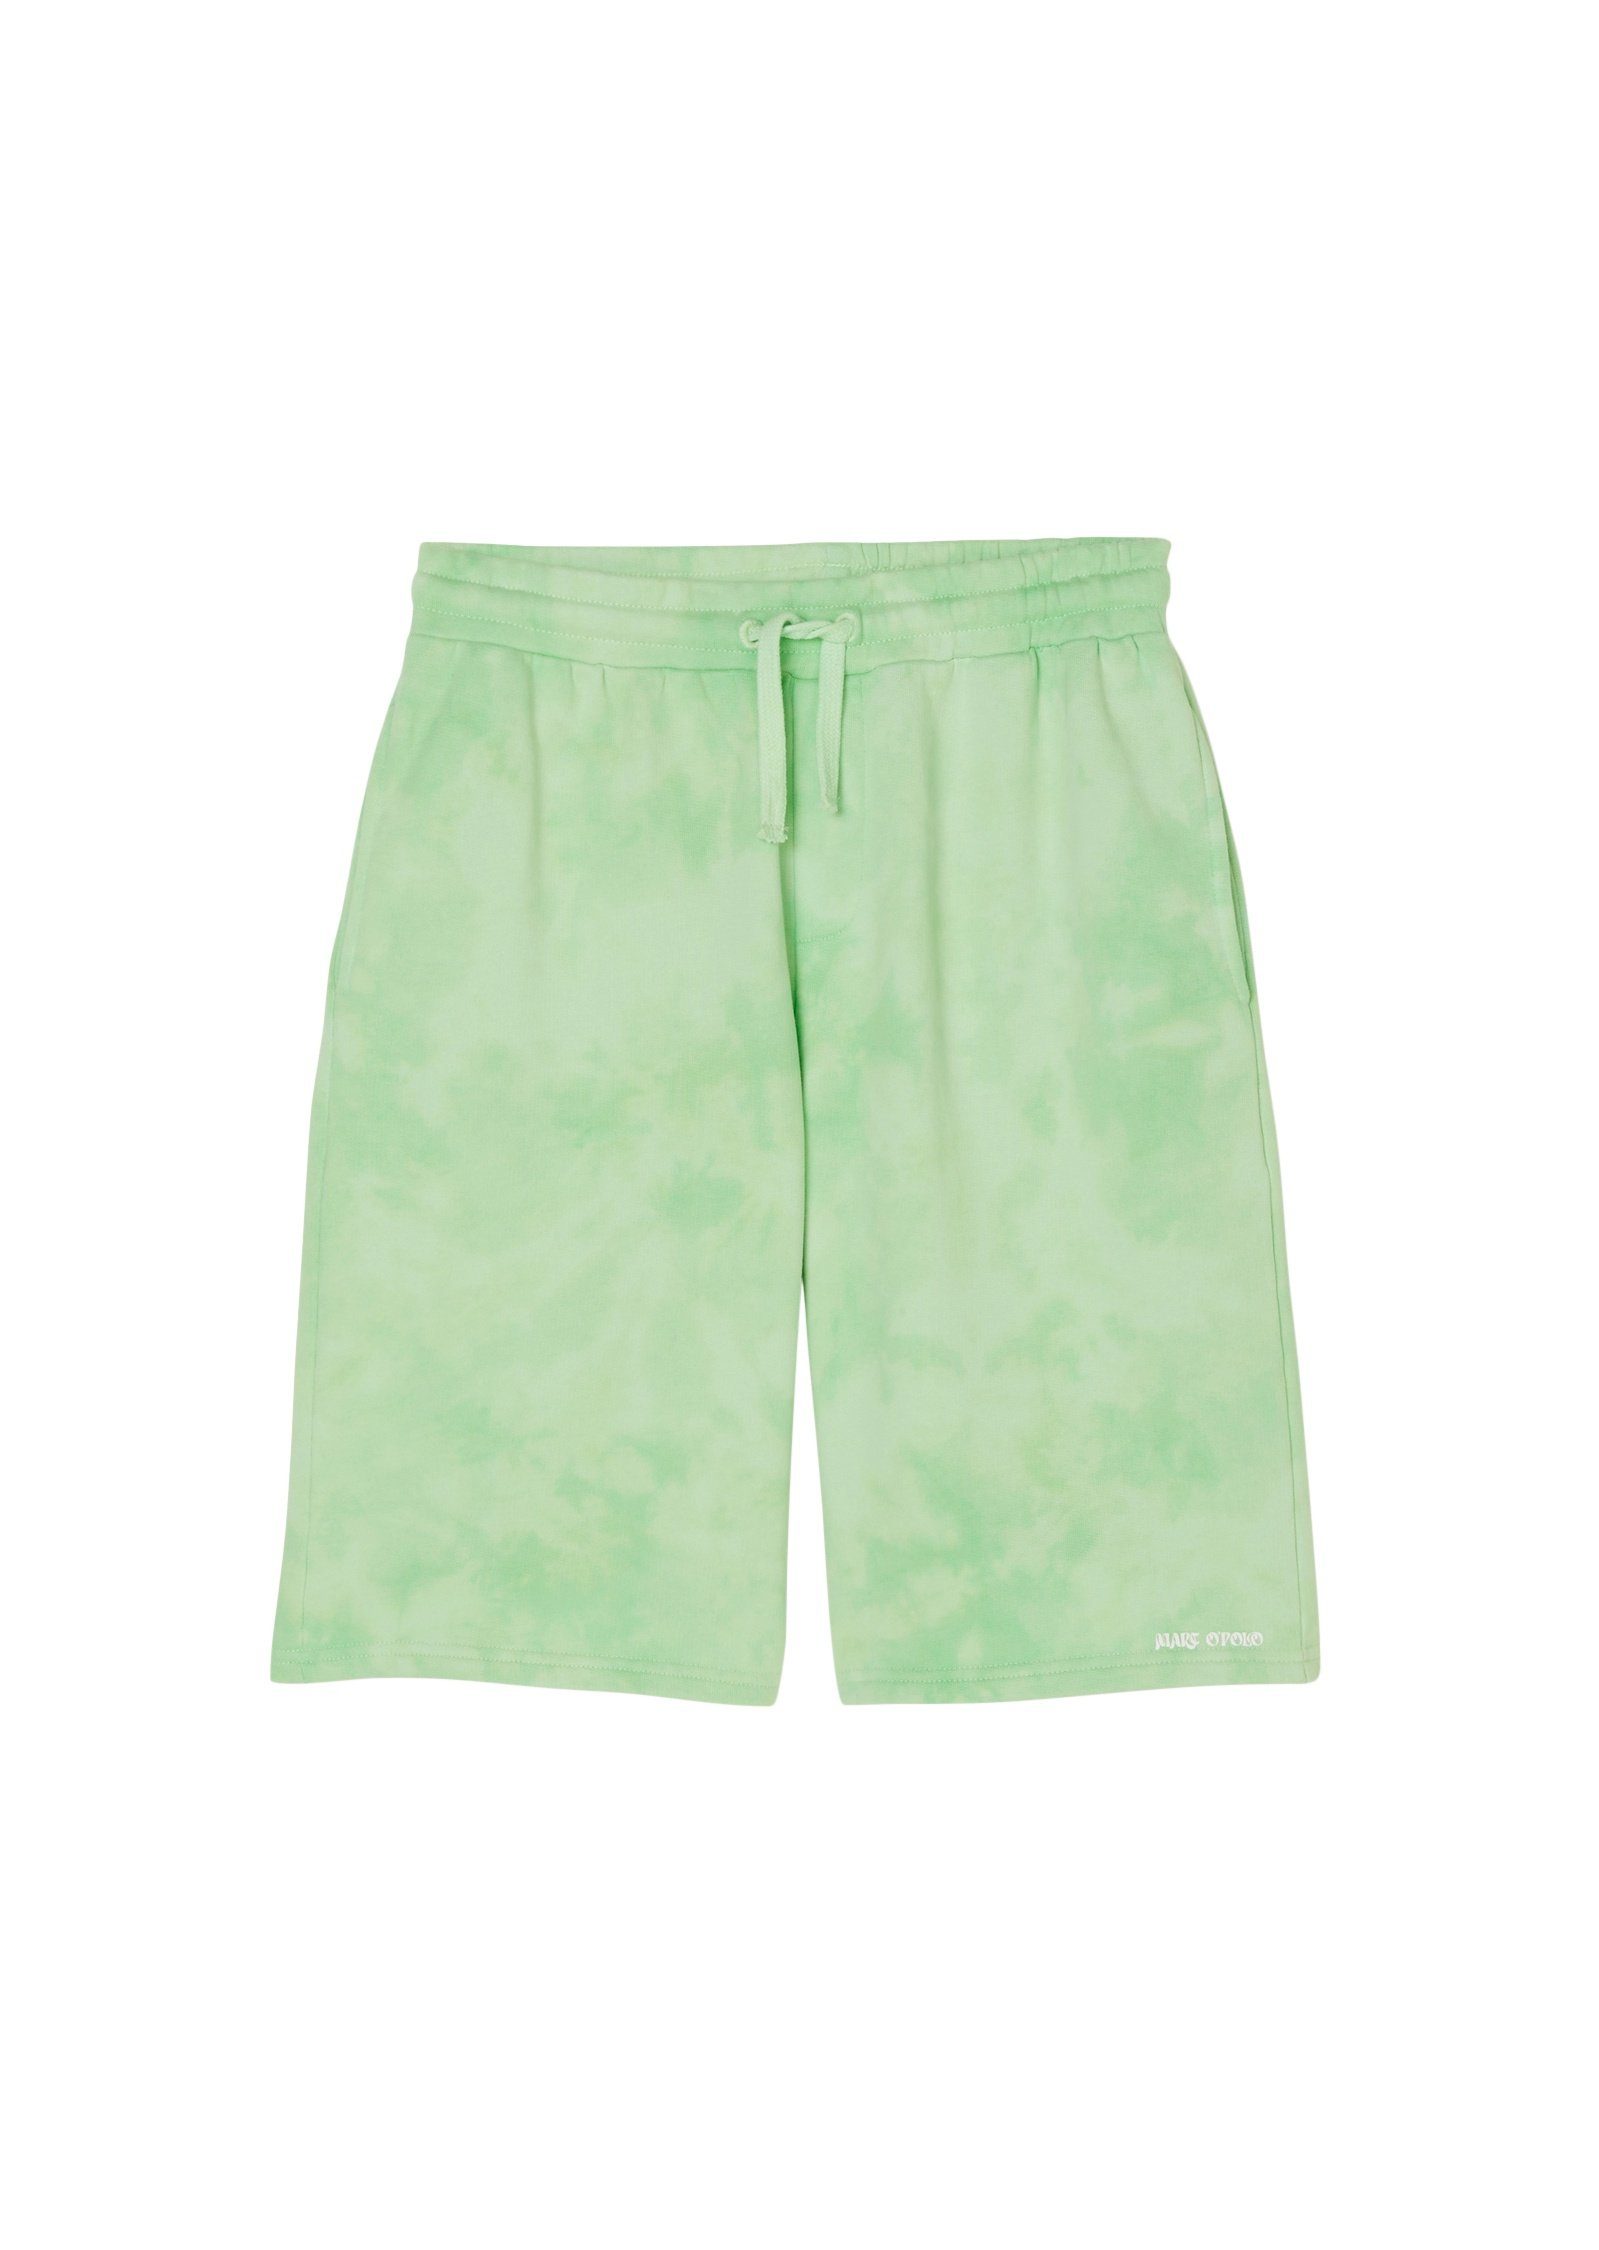 Marc O'Polo Shorts im Batik-Dessin grün